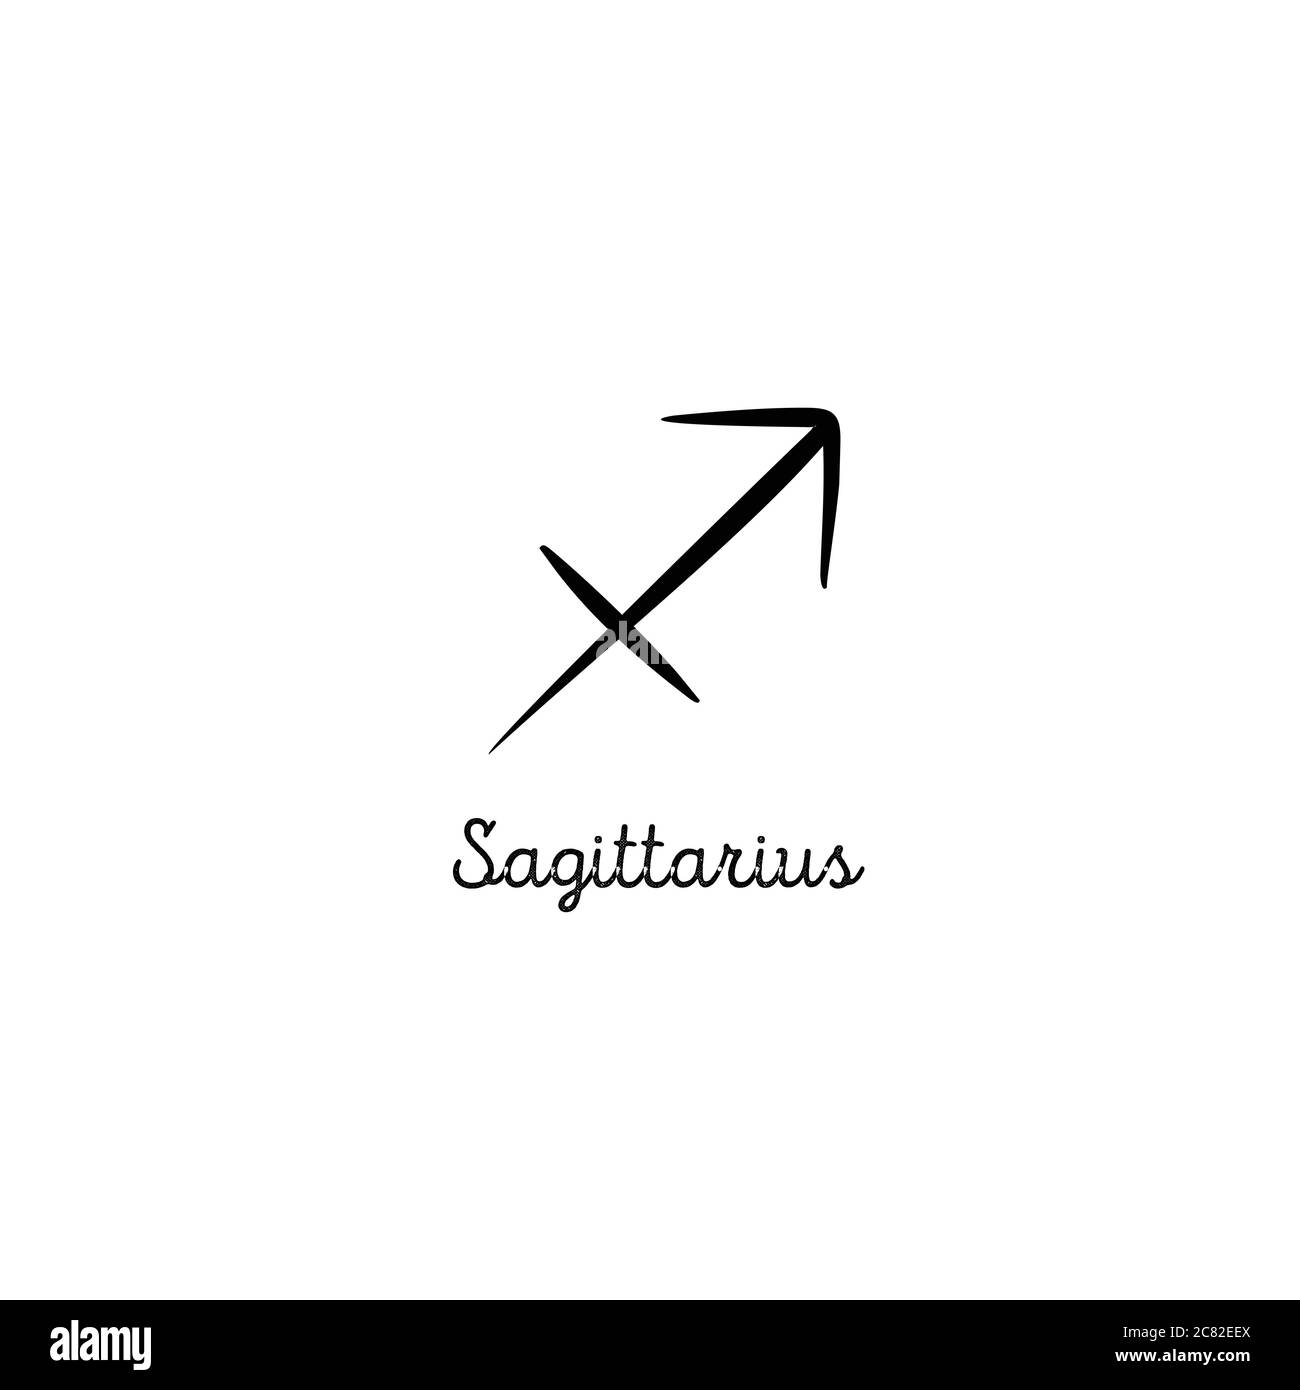 Sagittarius Constellation Temporary Tattoo Set of 3  Small Tattoos